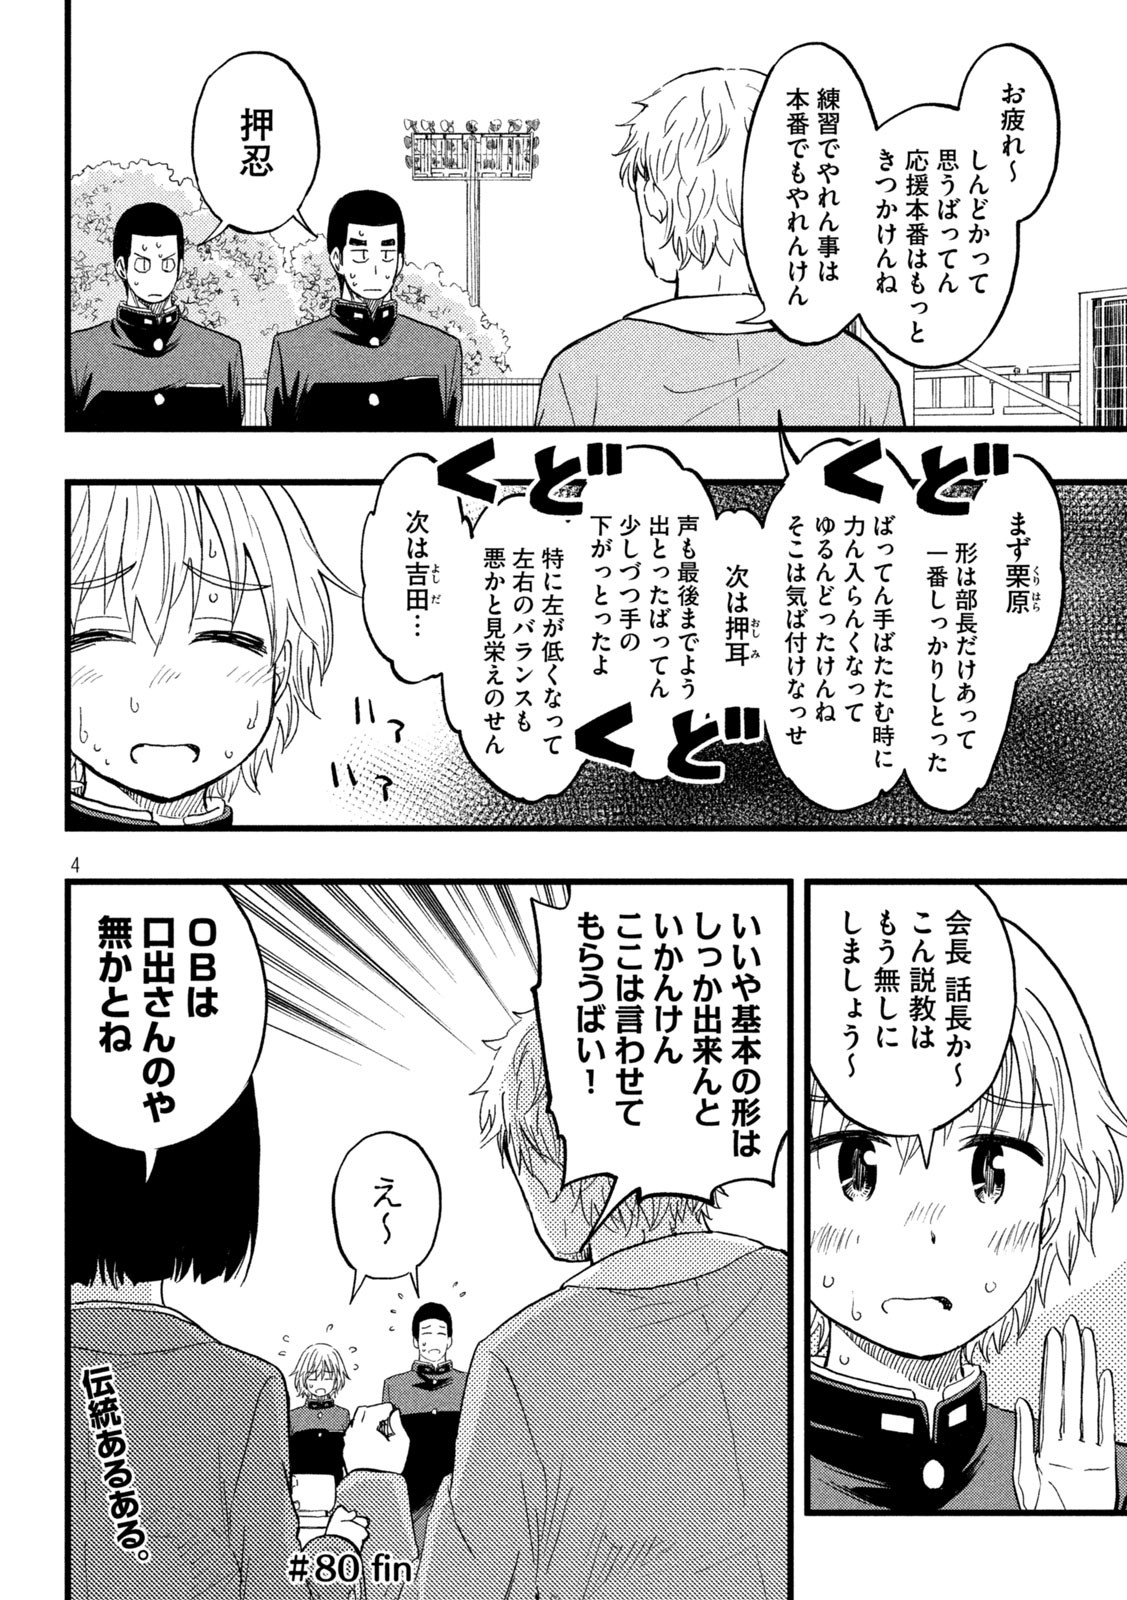 Koharu haru! - Chapter 80 - Page 4